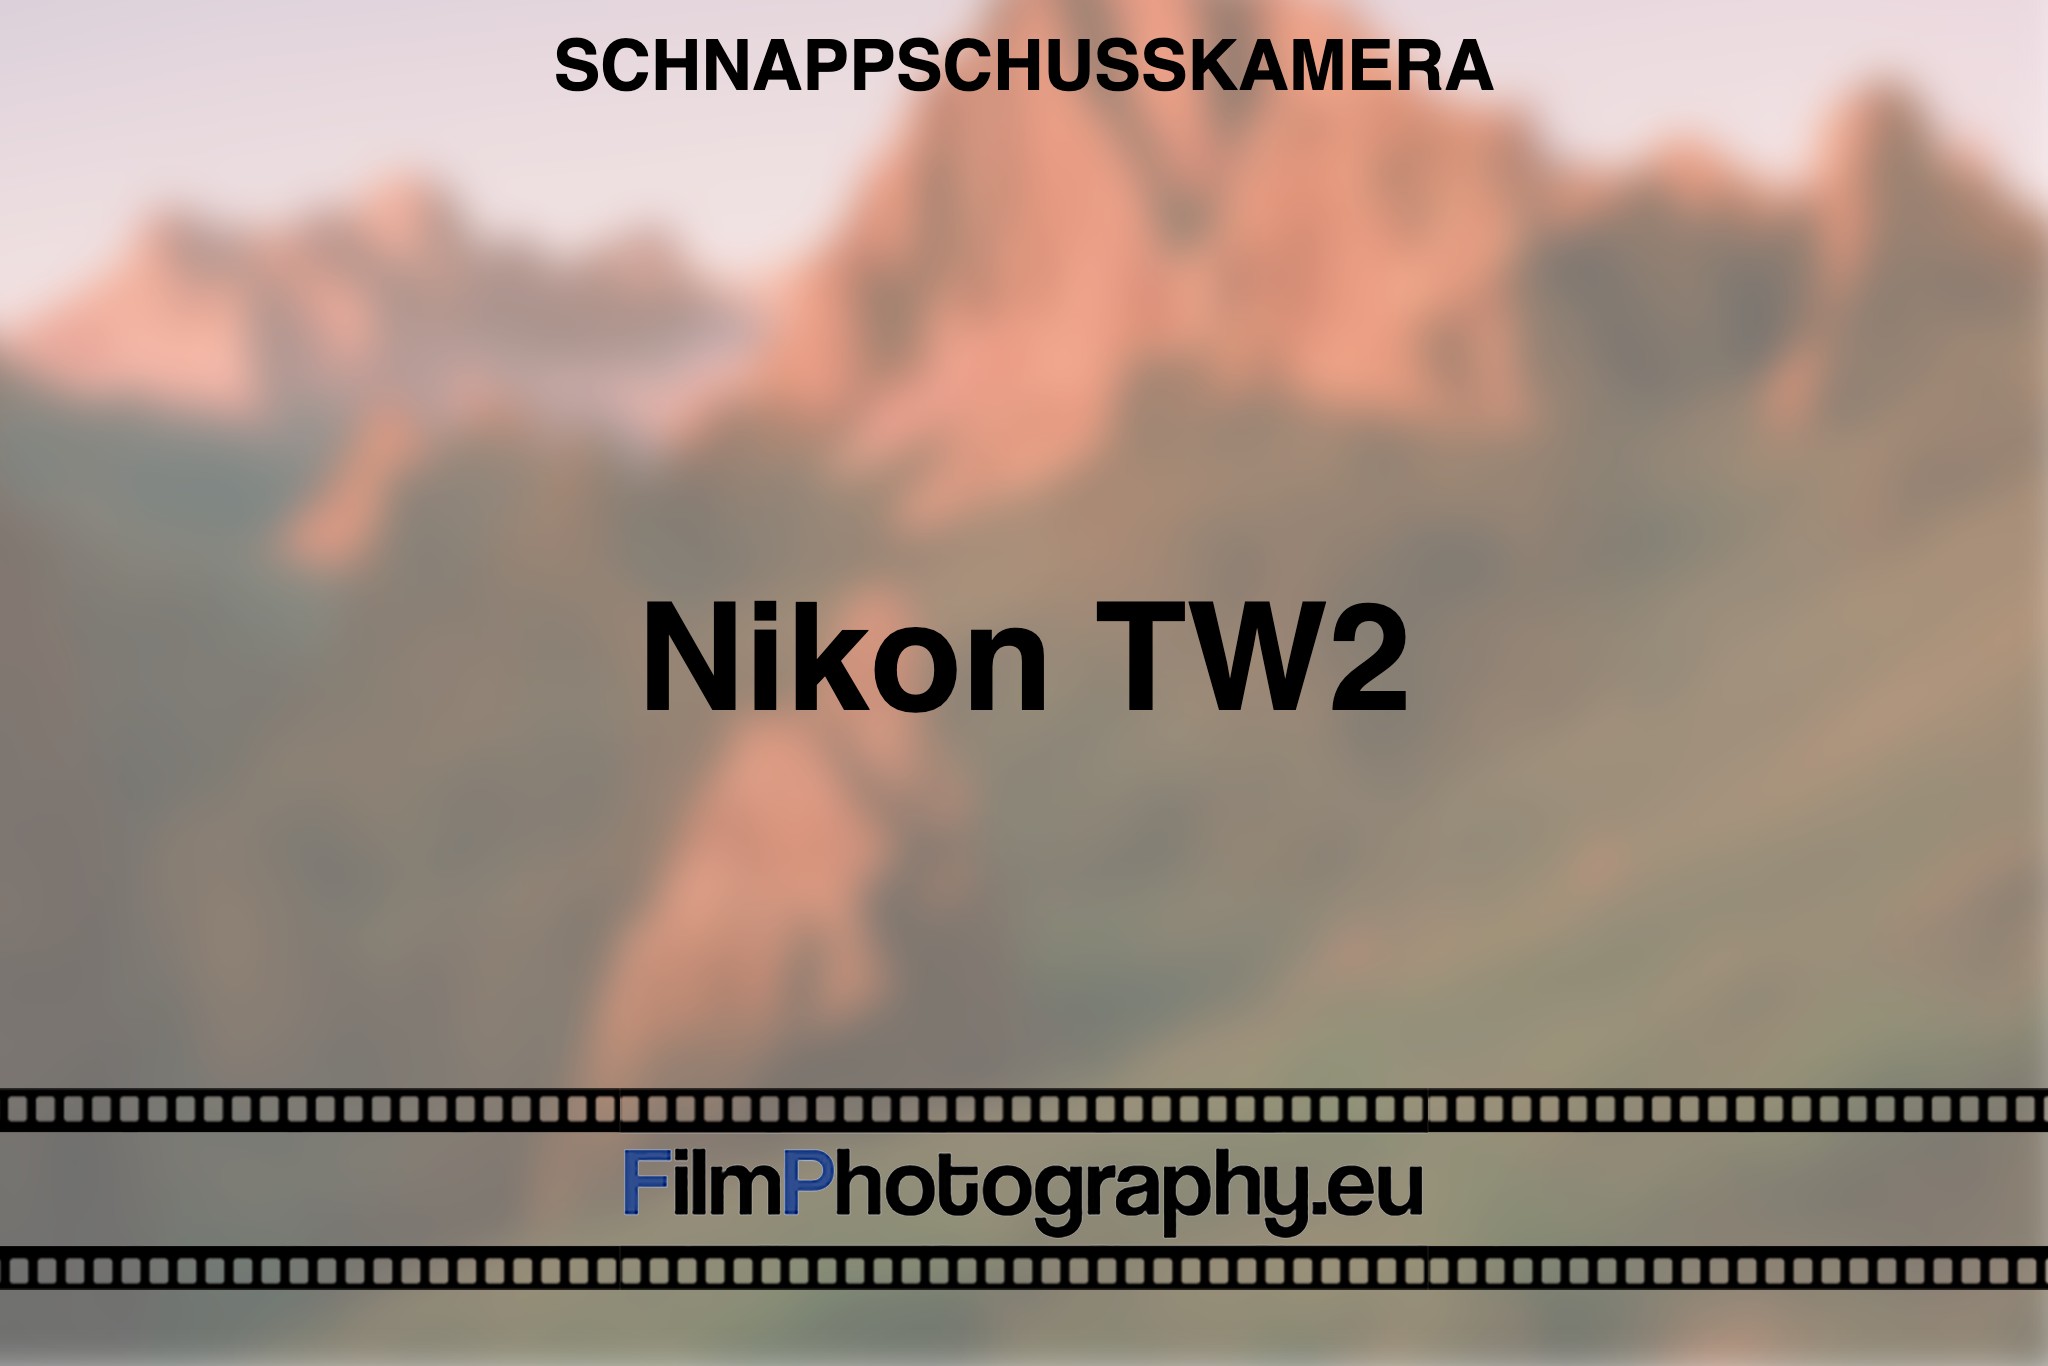 nikon-tw2-schnappschusskamera-bnv